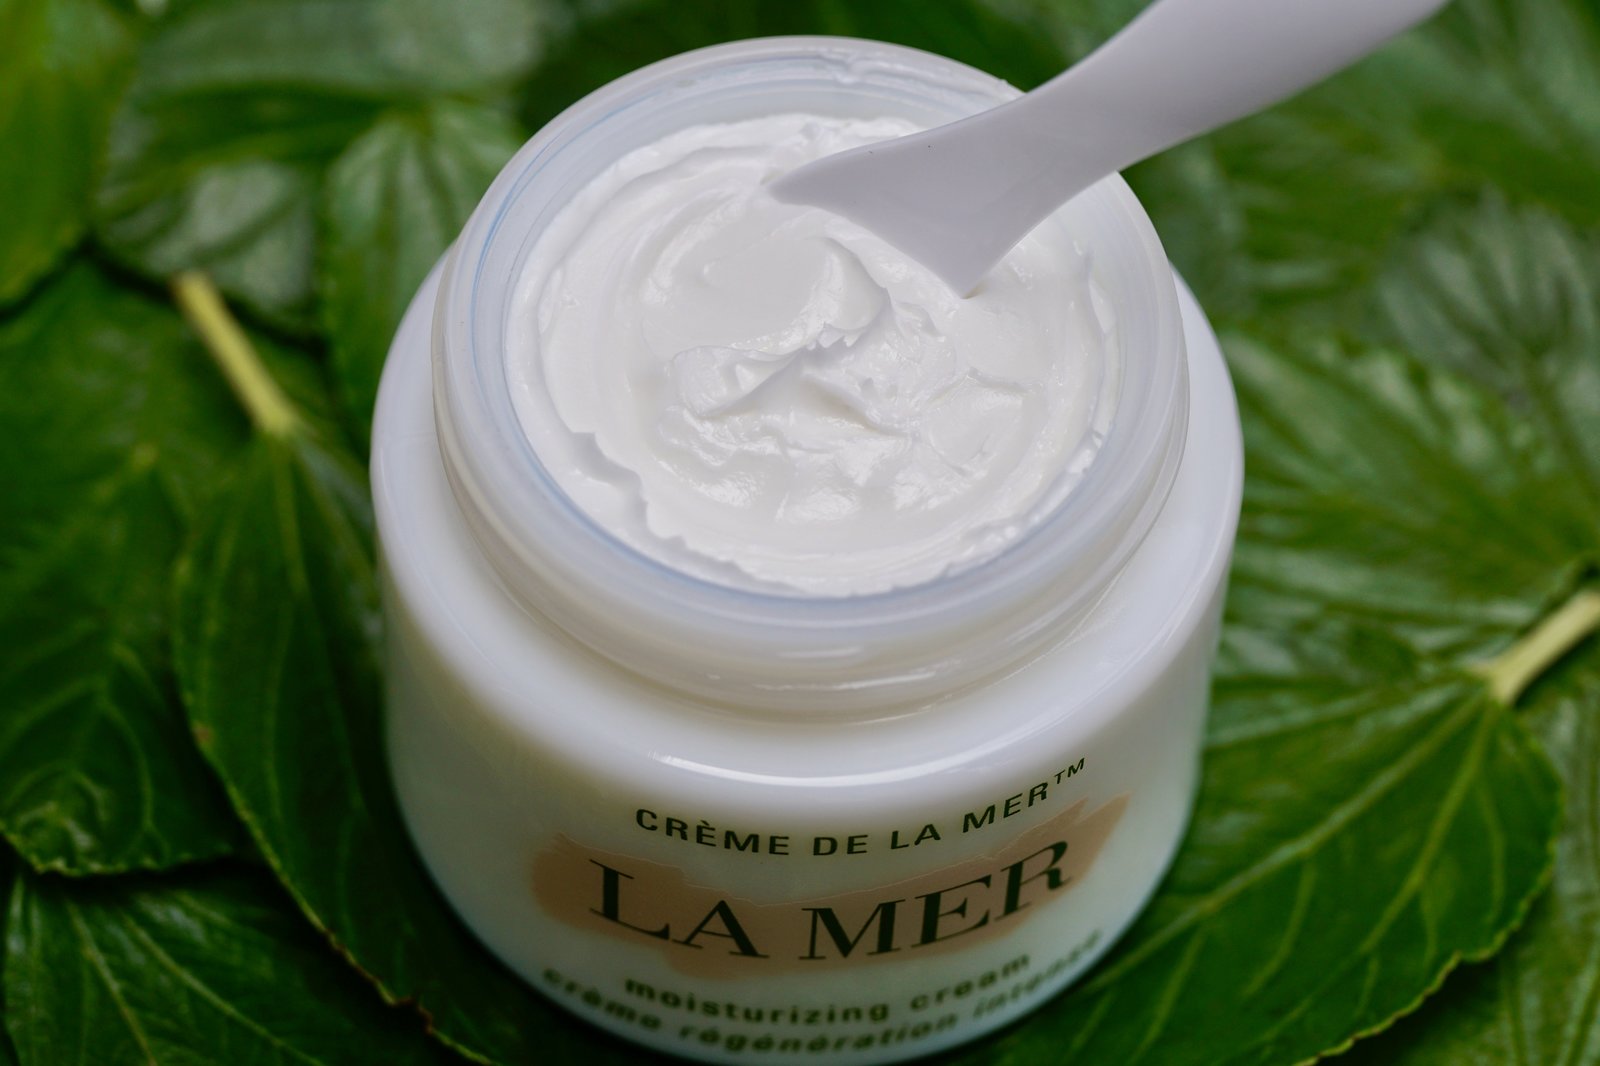 Close up of an open crème de la mer cream pot on a bed of leaves